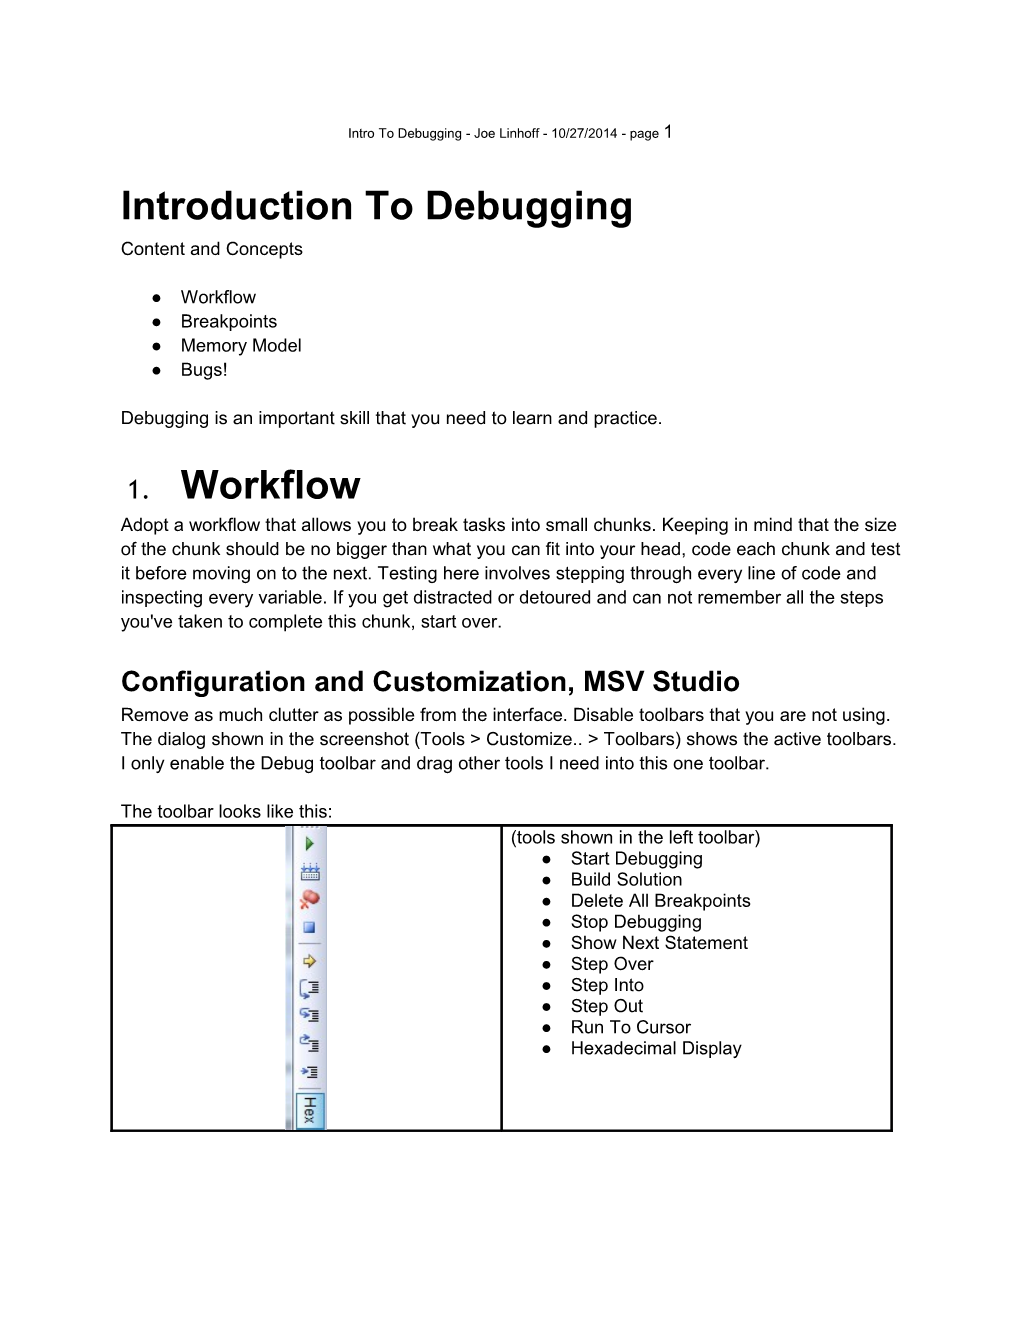 Intro to Debugging - Joe Linhoff - 10/27/2014 - Page 1